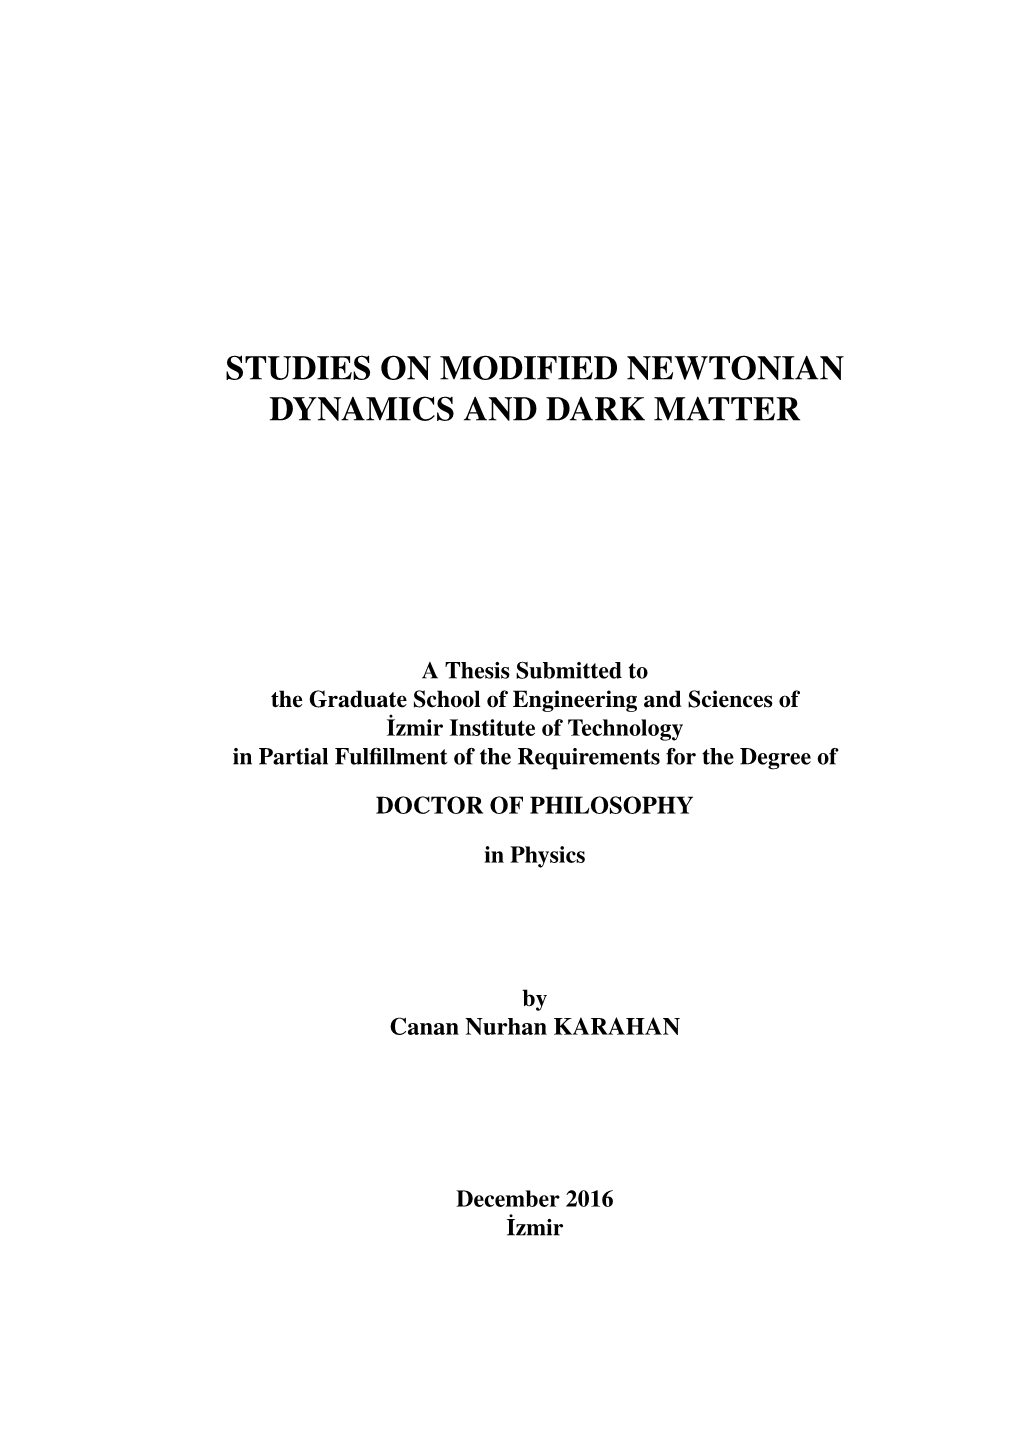 Studies on Modified Newtonian Dynamics and Dark Matter